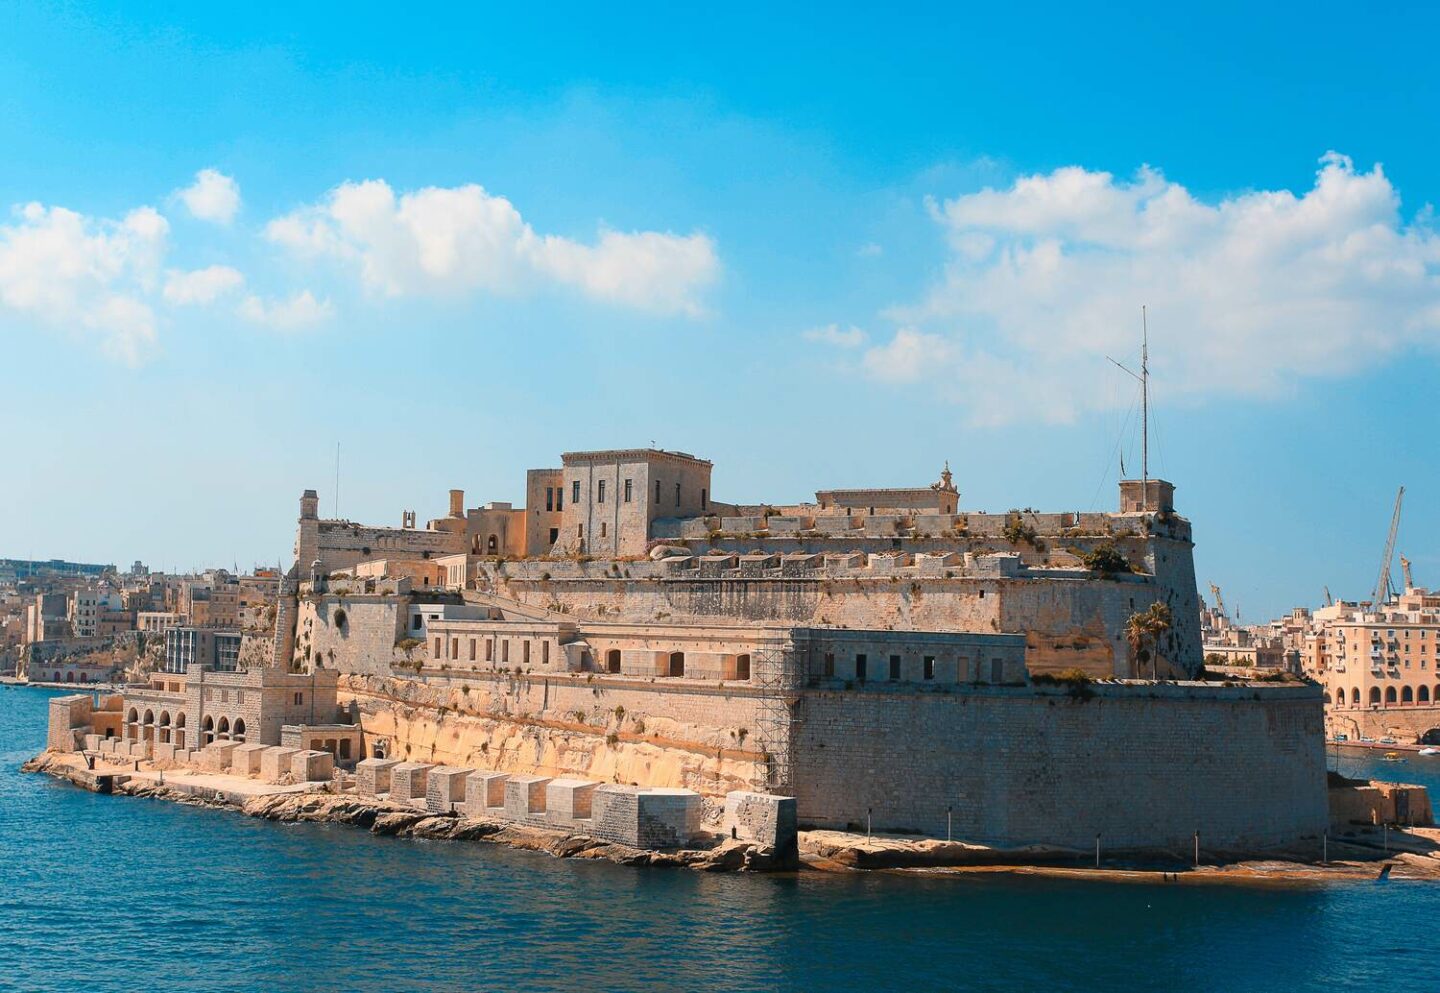 Fort St. Elmo in Valletta Malta